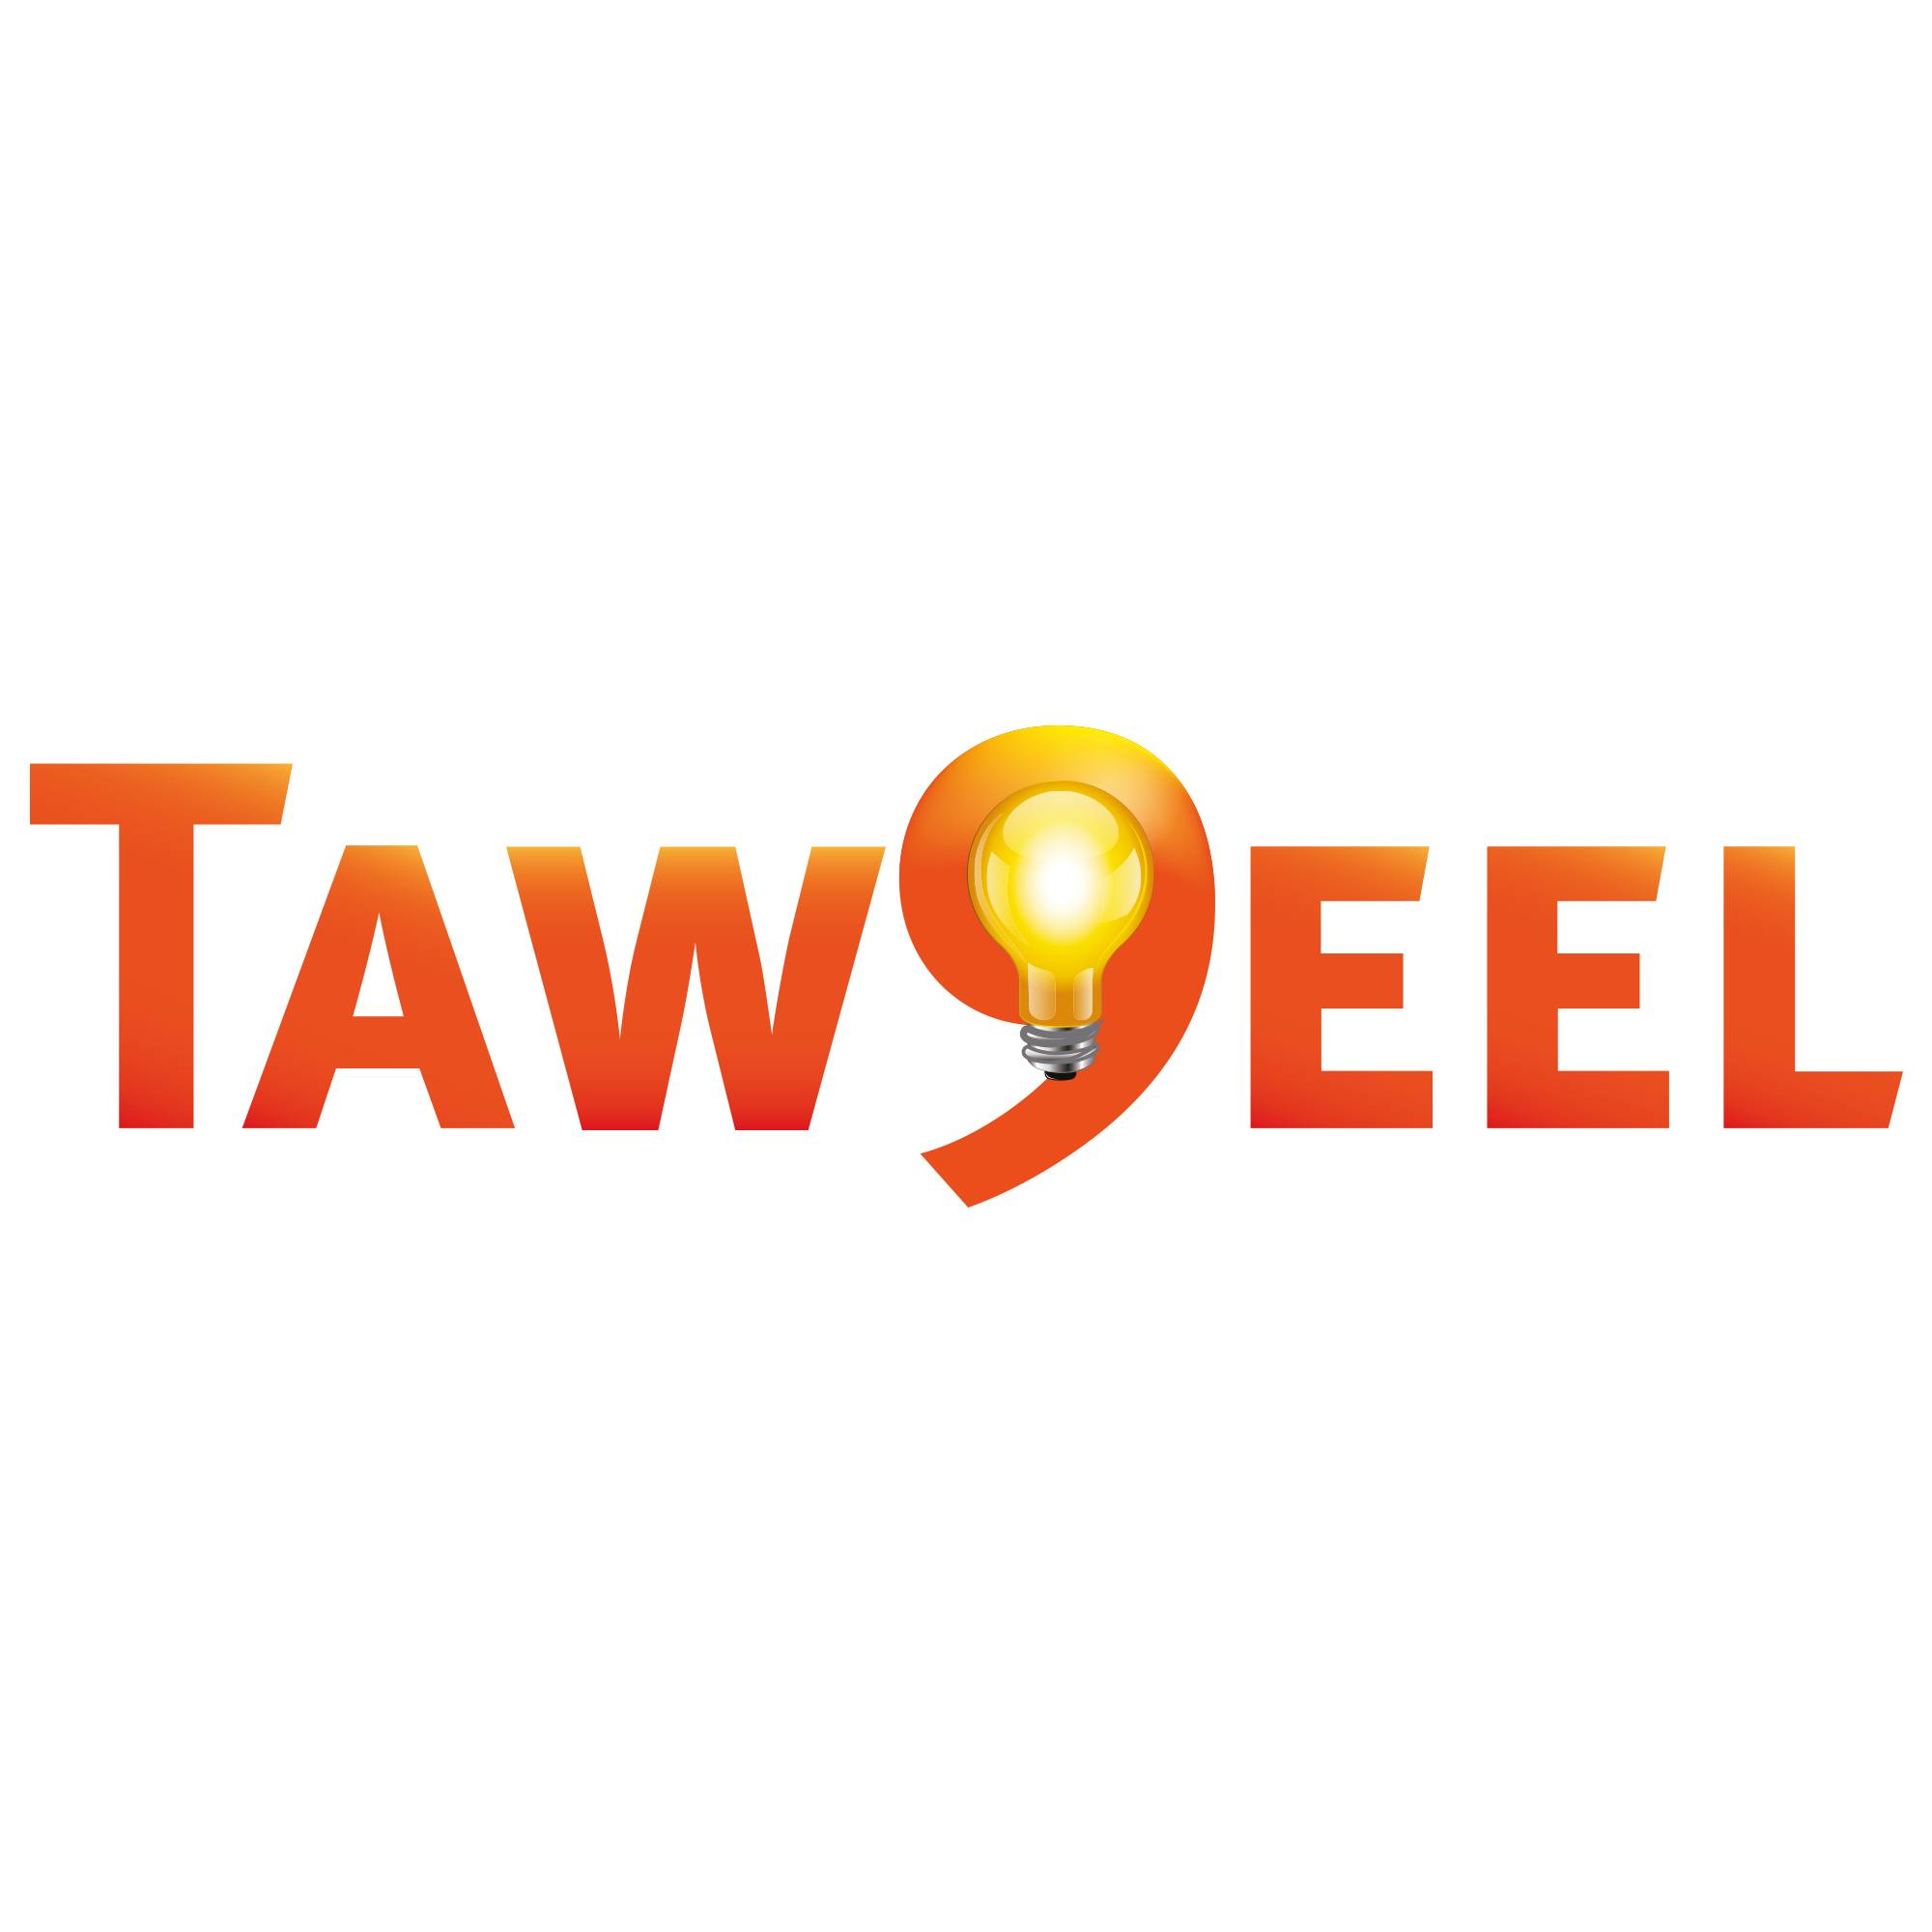 taw9eel: Your Seamless Shopping Platform